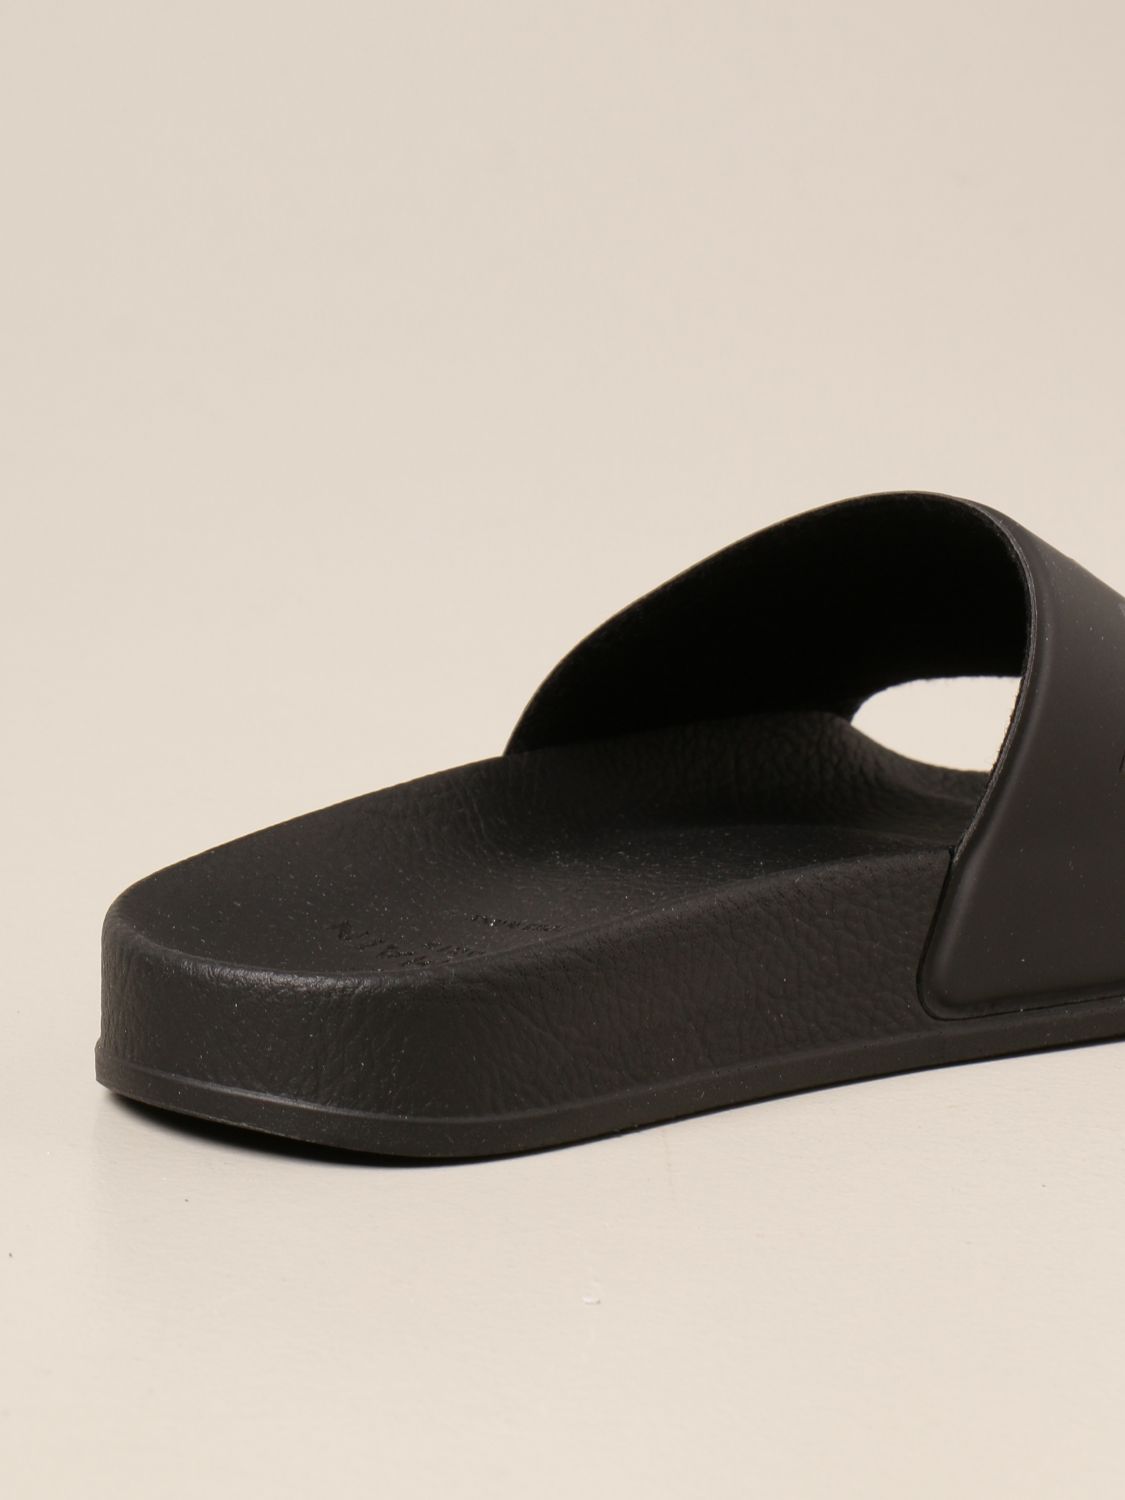 Shoes Balmain: Balmain rubber slipper sandal black 3